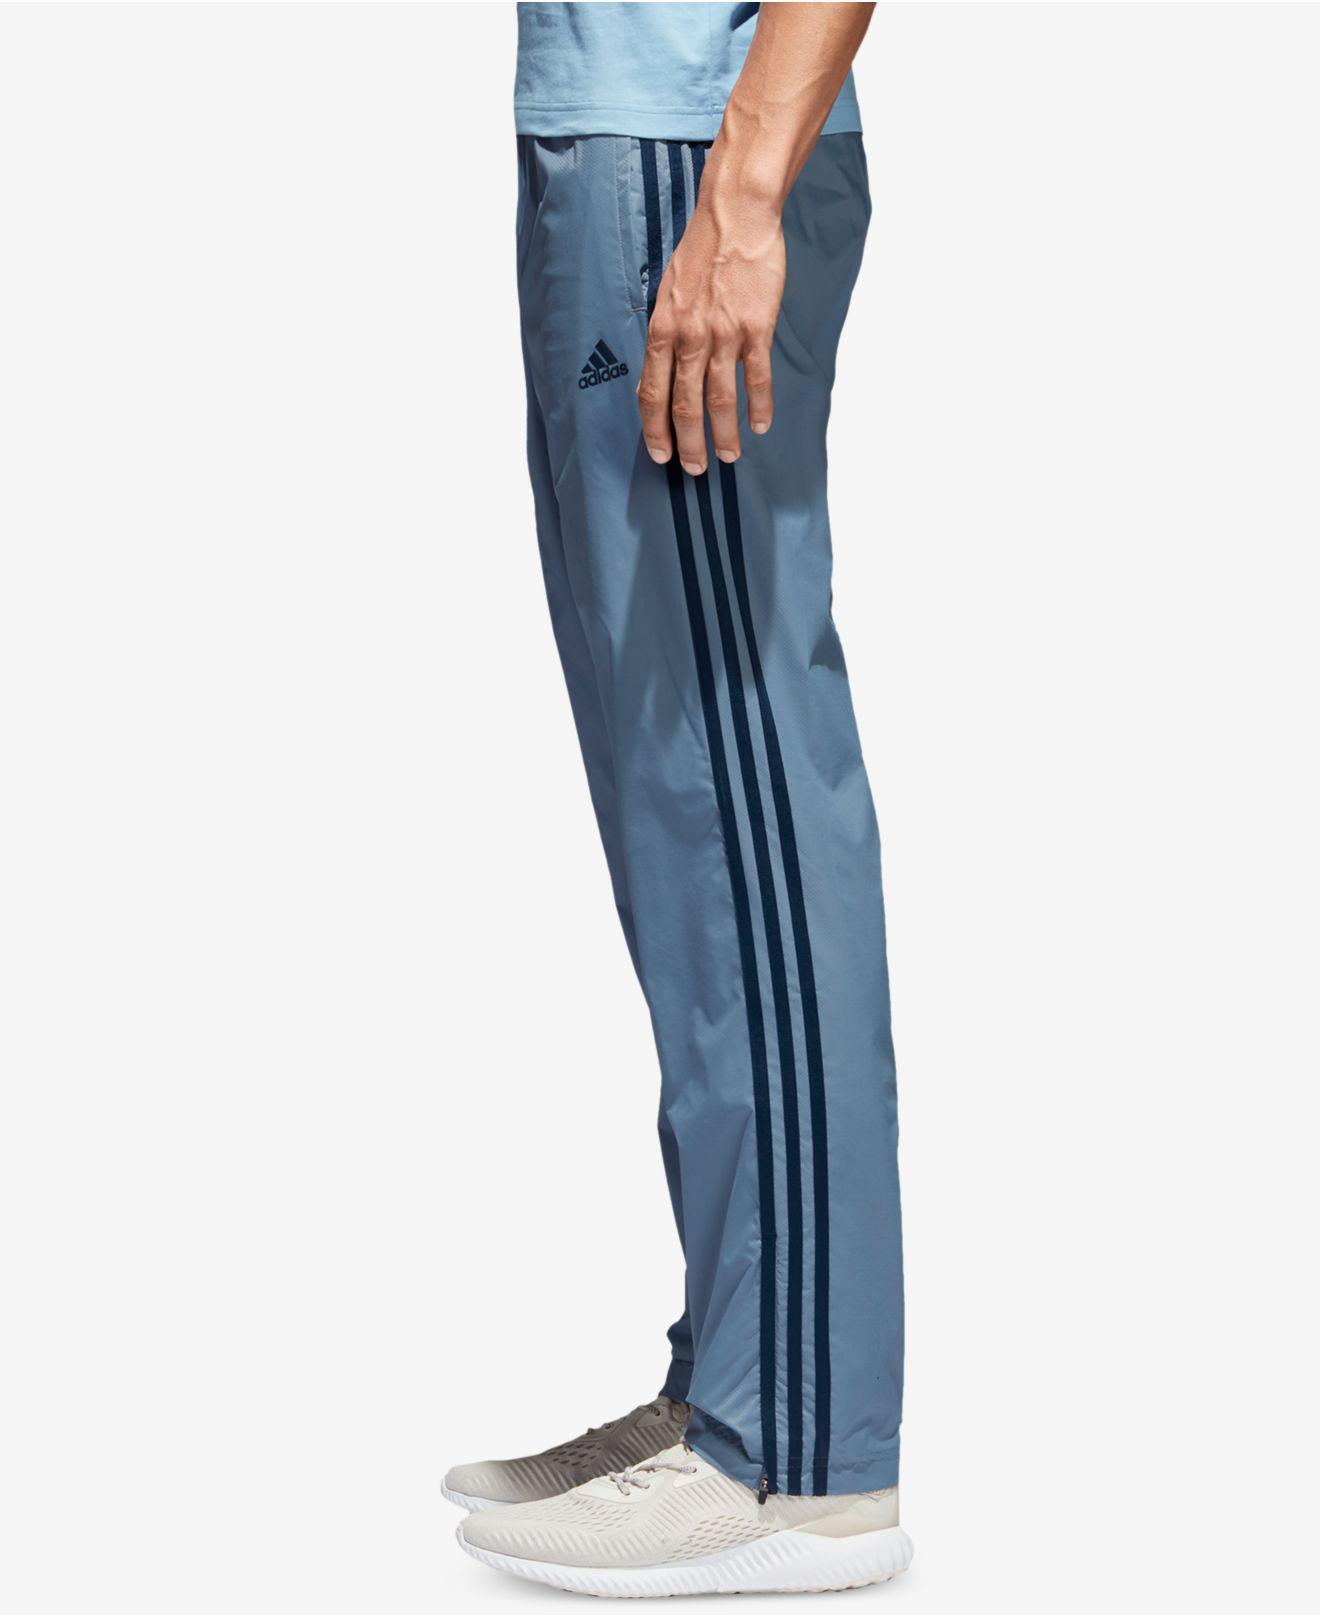 adidas 3 stripe essential pants